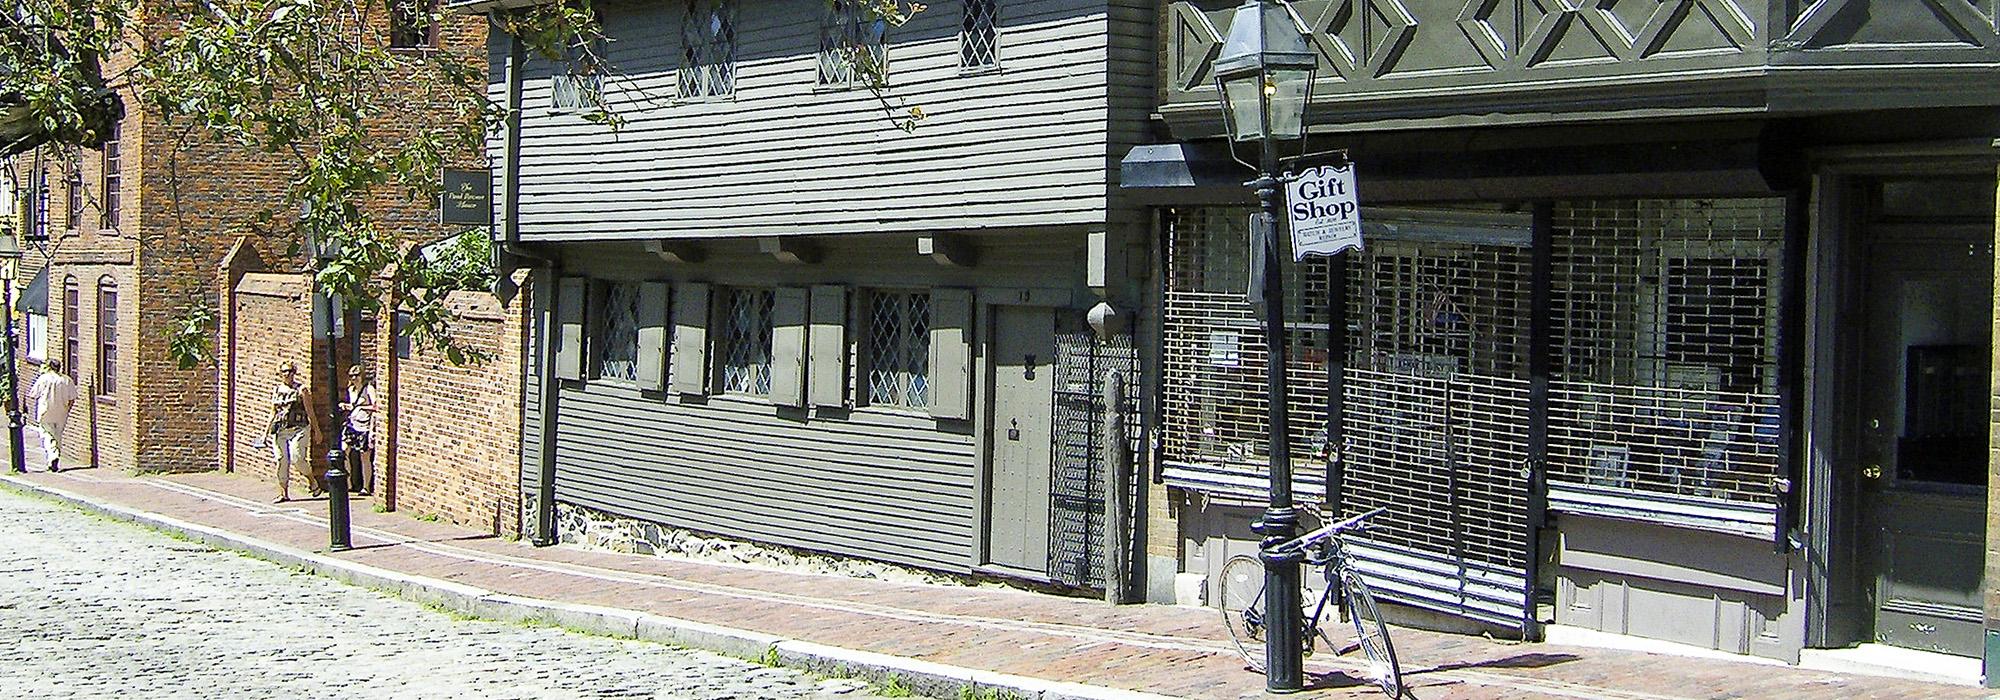 Paul Revere House, Boston, MA